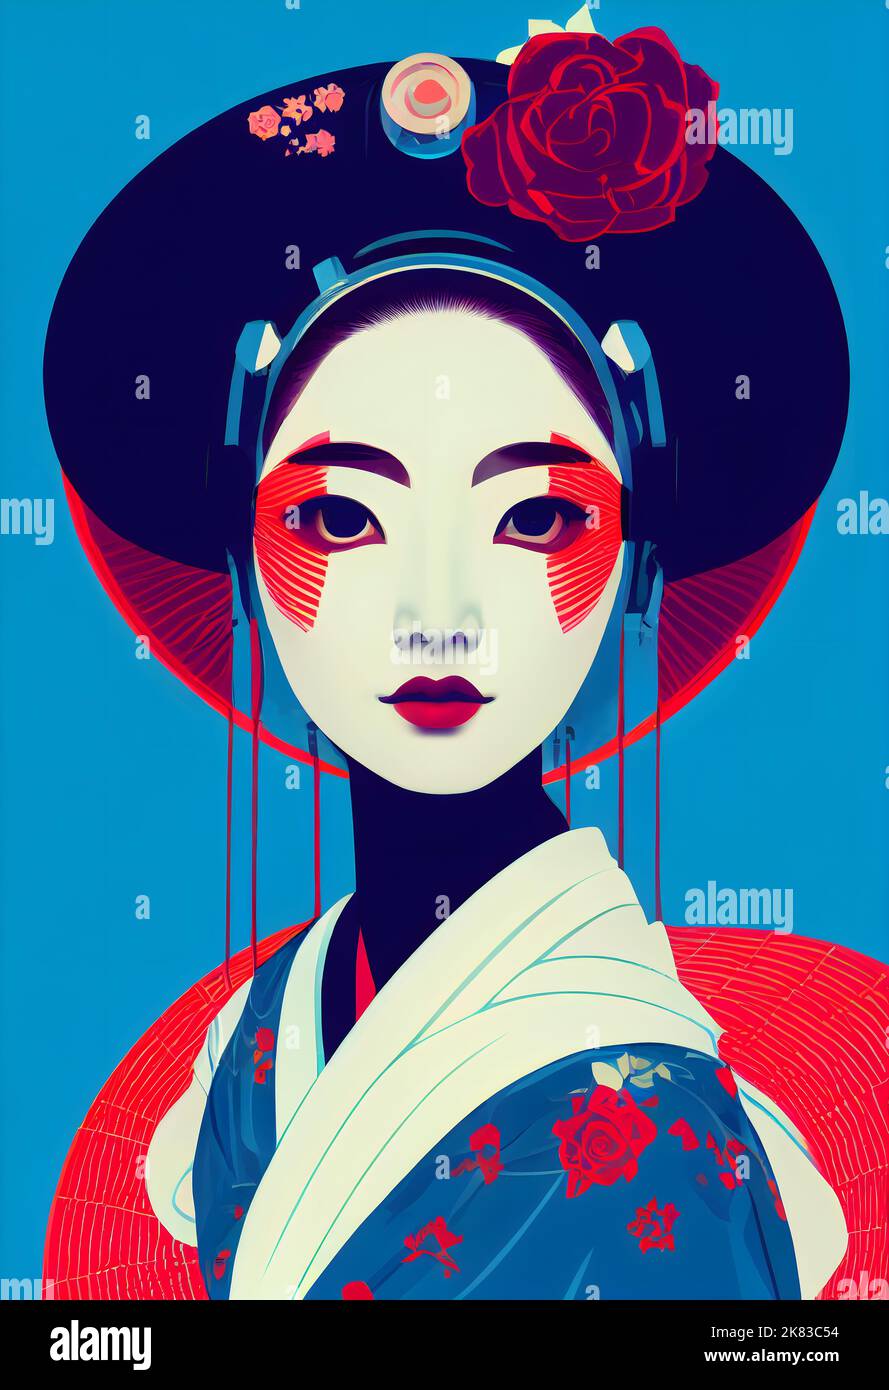 Illustrative drawing of a geisha. 1950s poster style. Digital art. Stock Photo